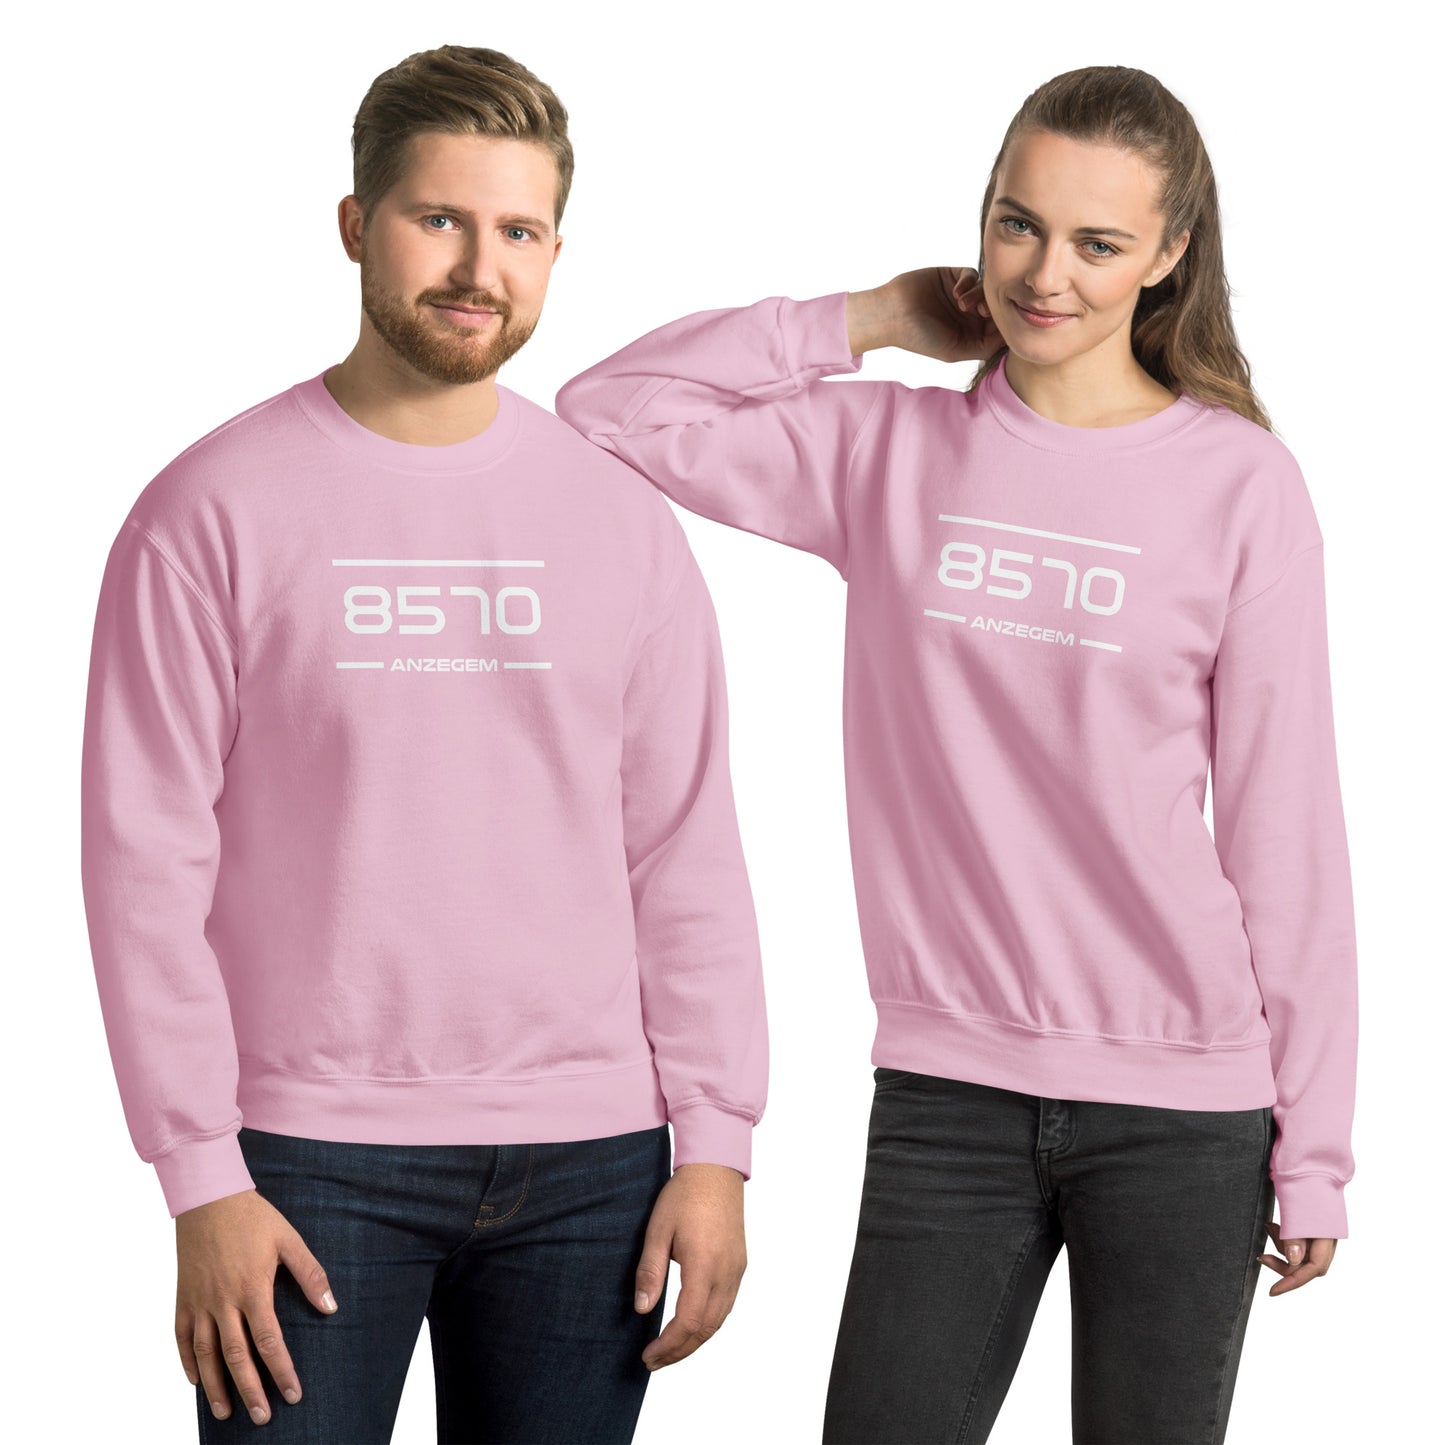 Sweater - 8570 - Anzegem (M/V)